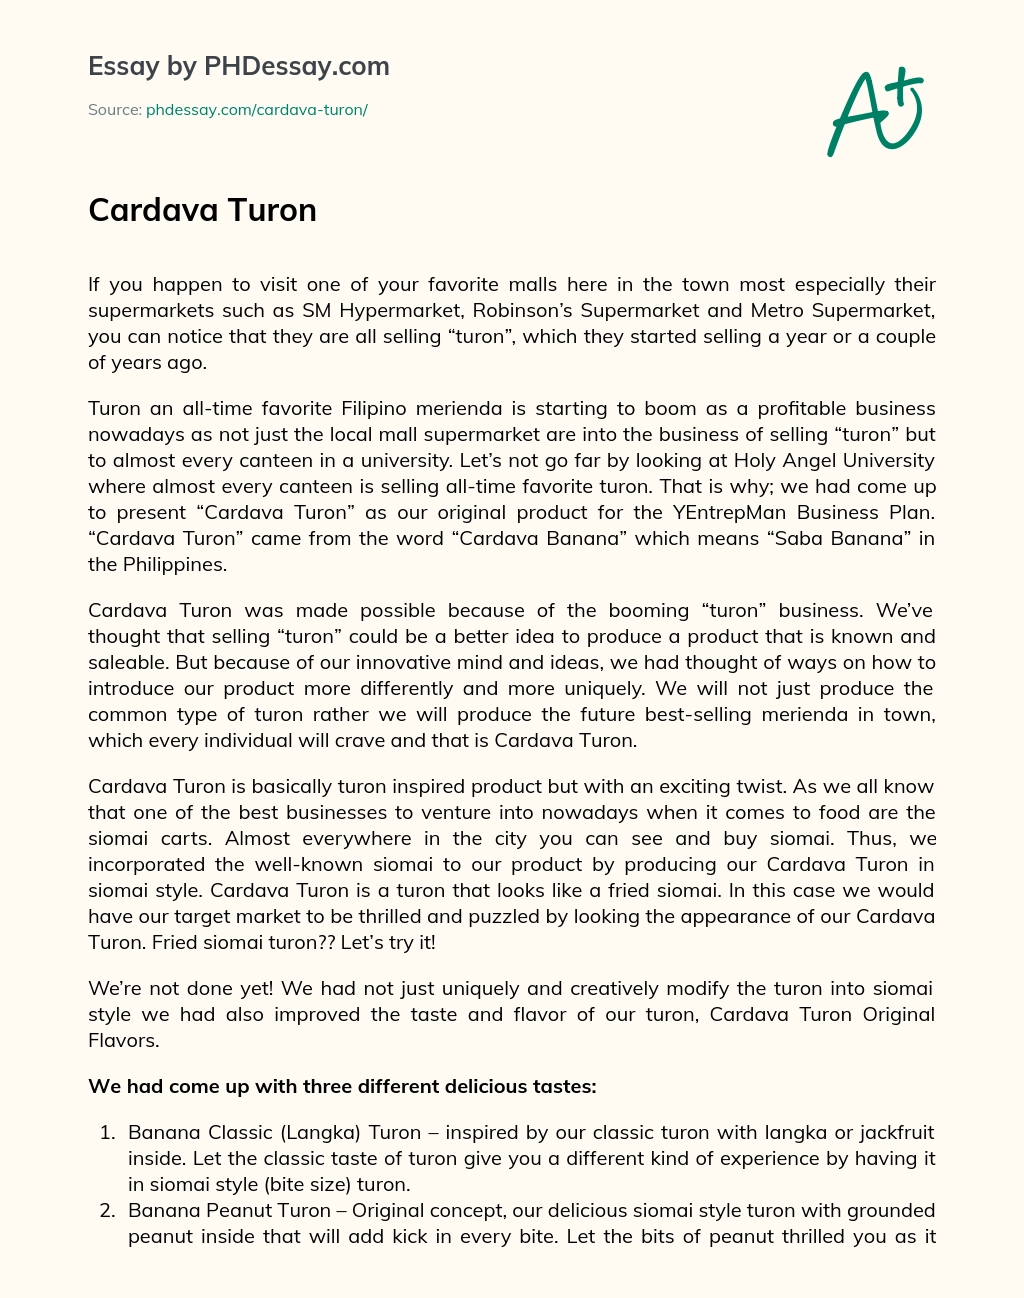 Turon Business Booms: Introducing Cardava Turon essay